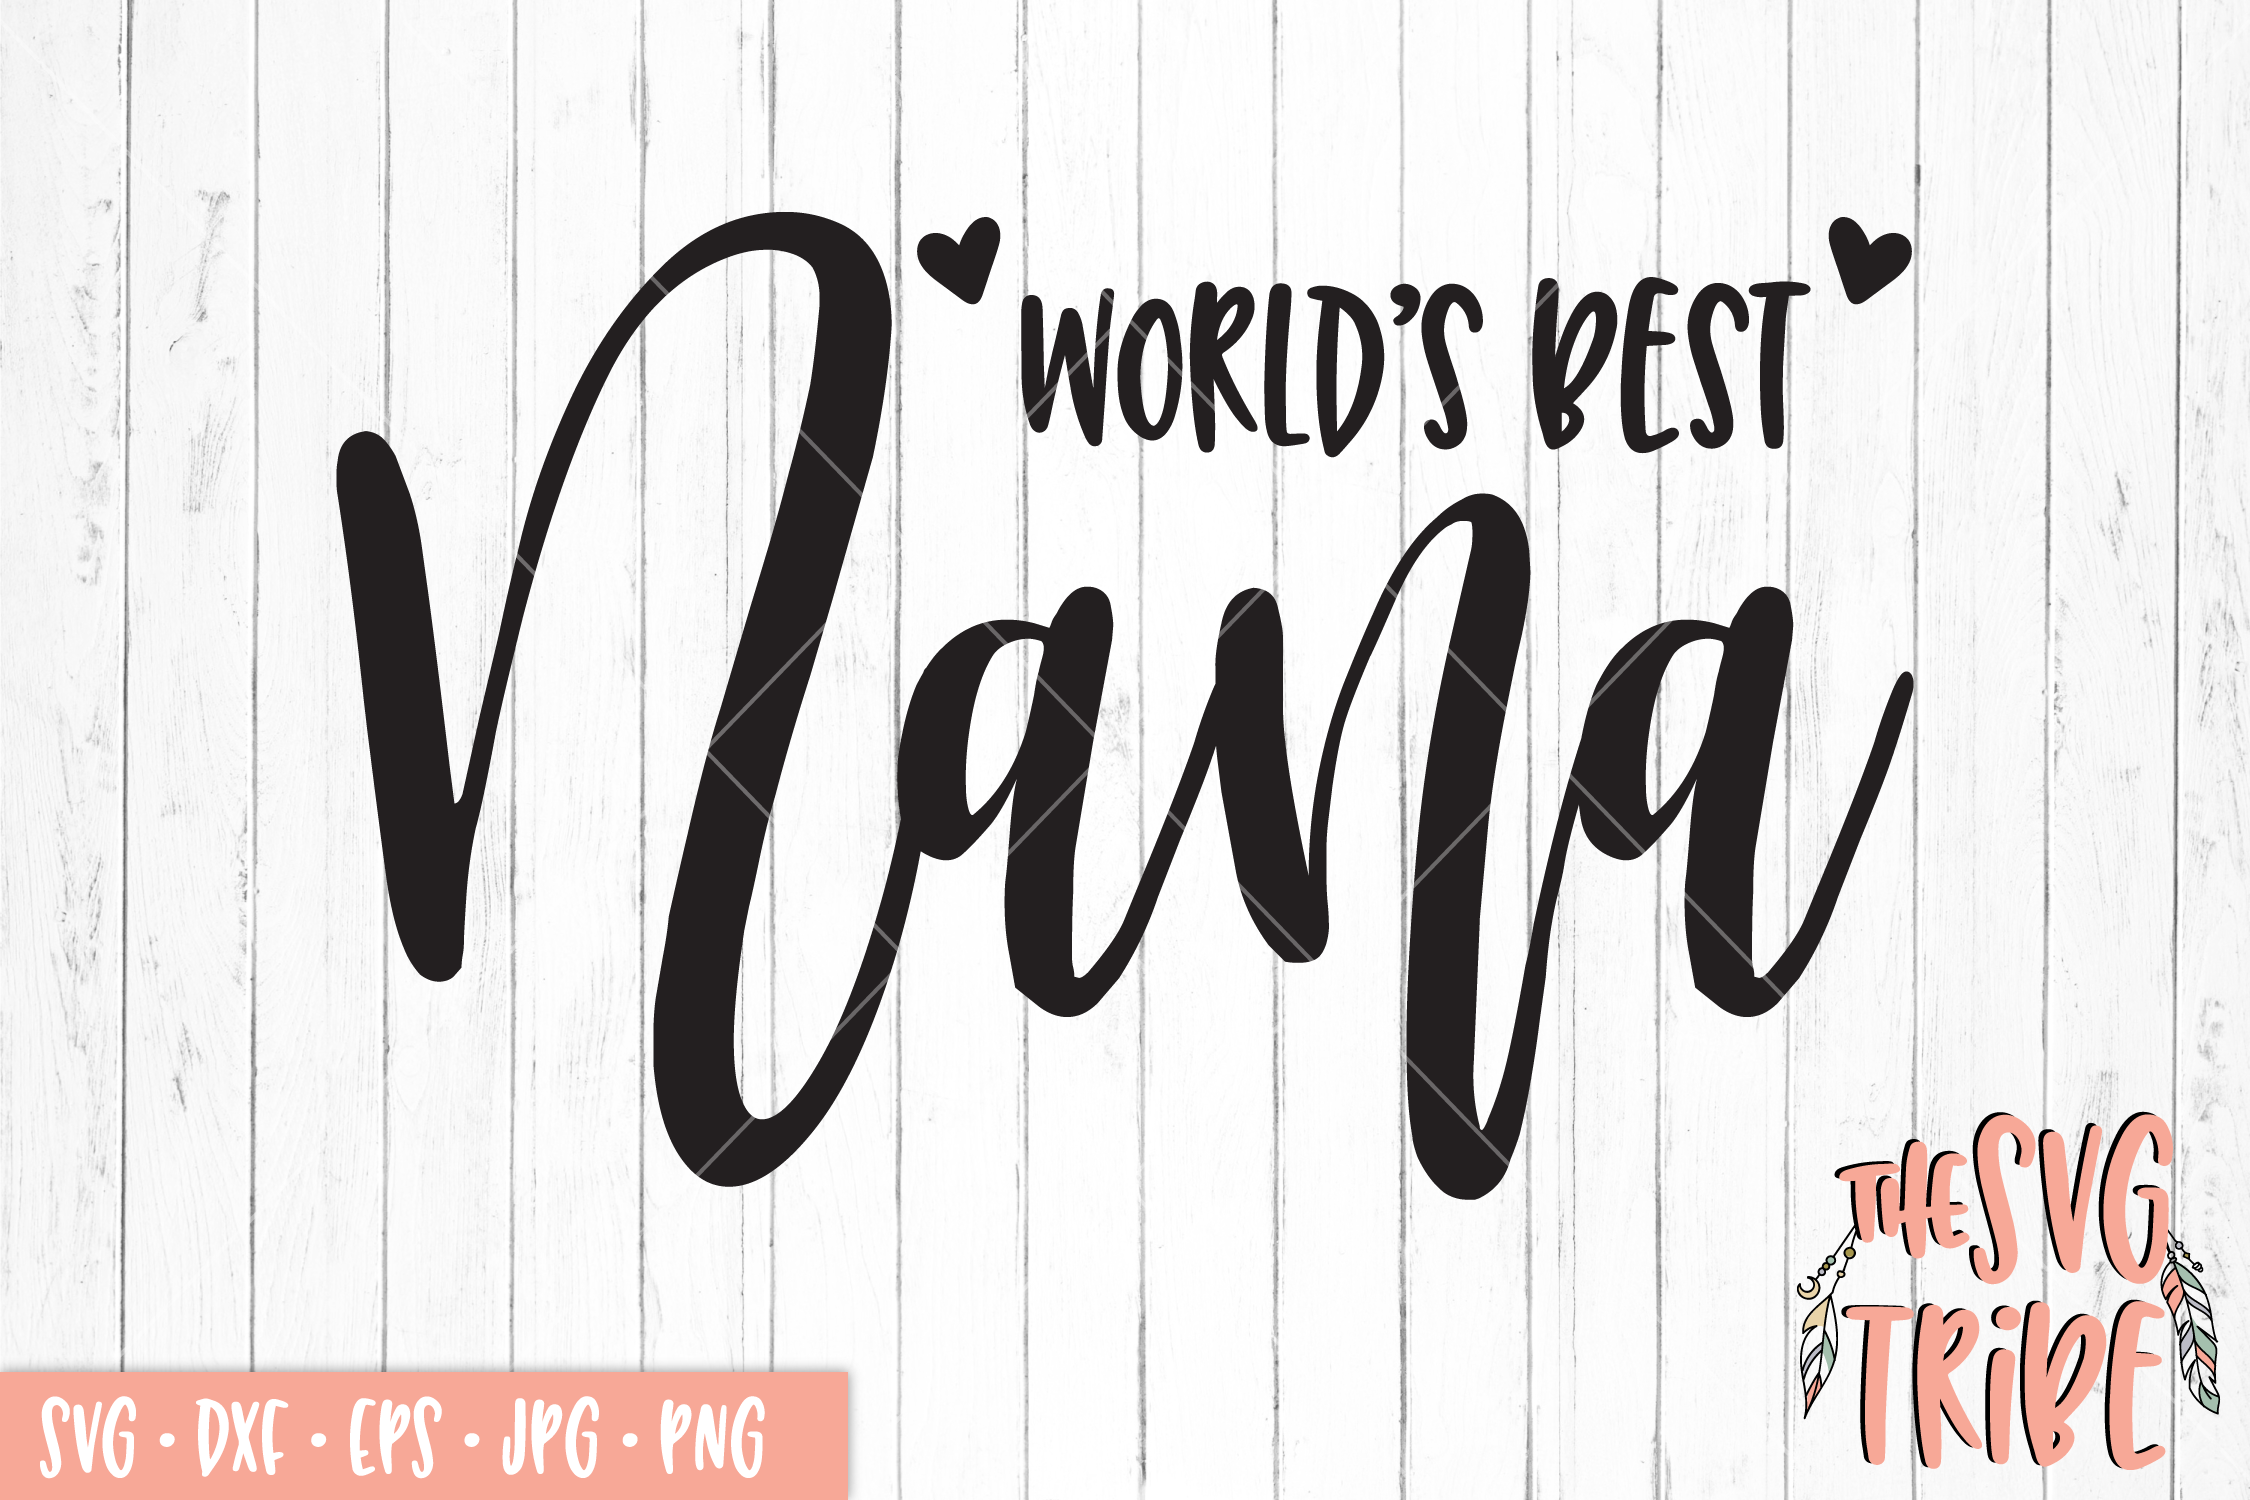 World's Best Nana, SVG DXF PNG EPS JPG Cutting Files